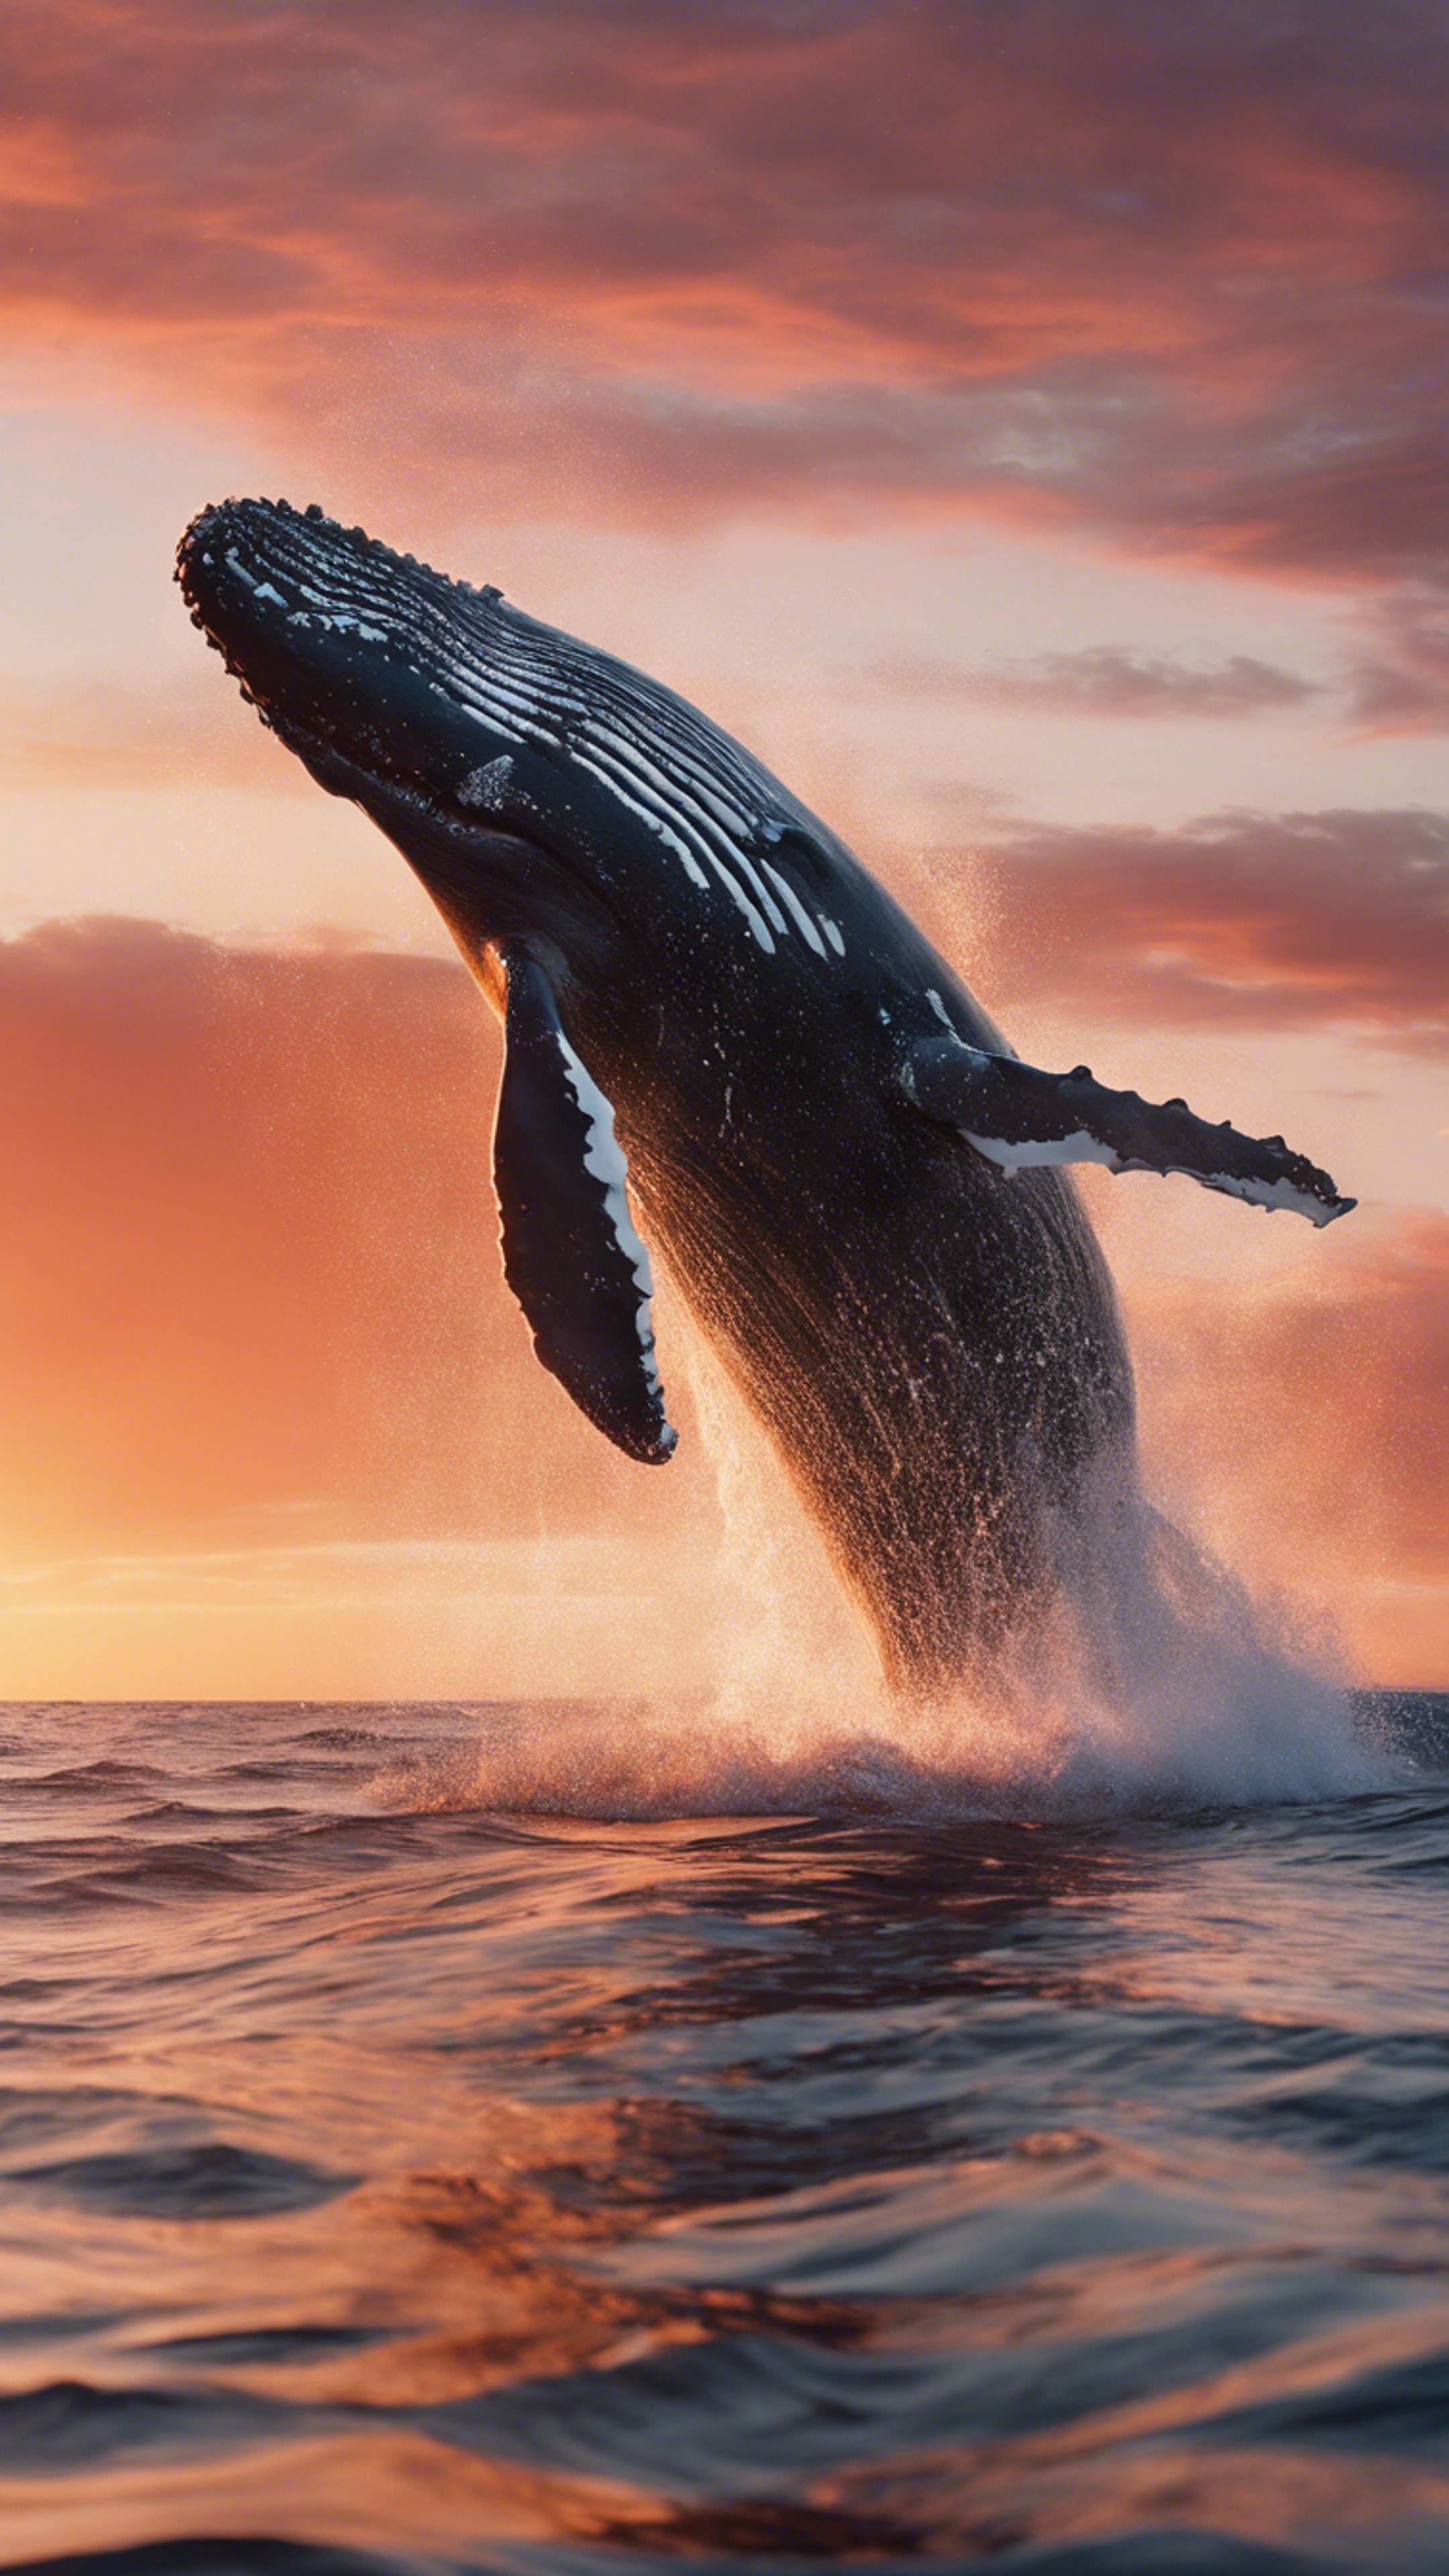 A happy humpback whale breaching the ocean surface during a reddish sunrise.壁紙[bb6d9b7200154f21a09d]